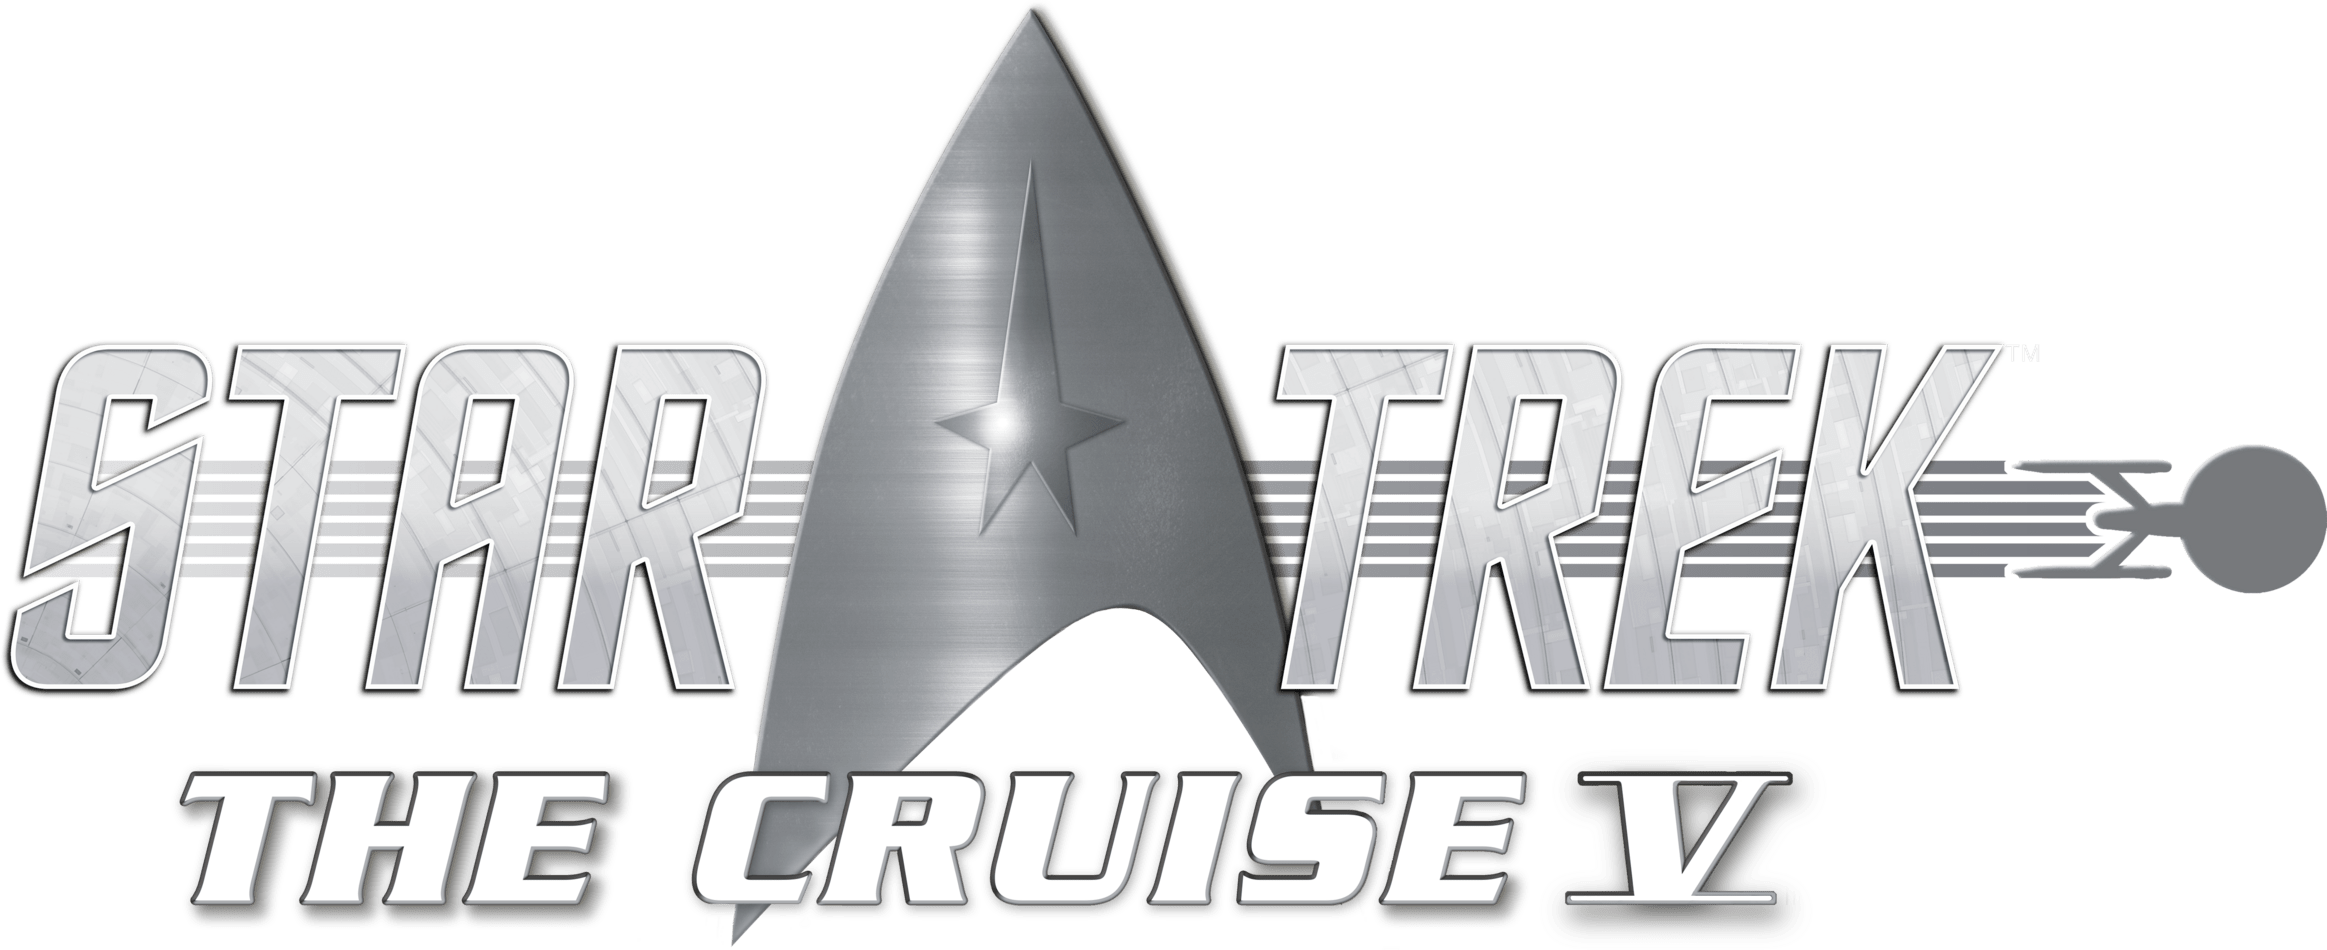 Star Trek The Cruise